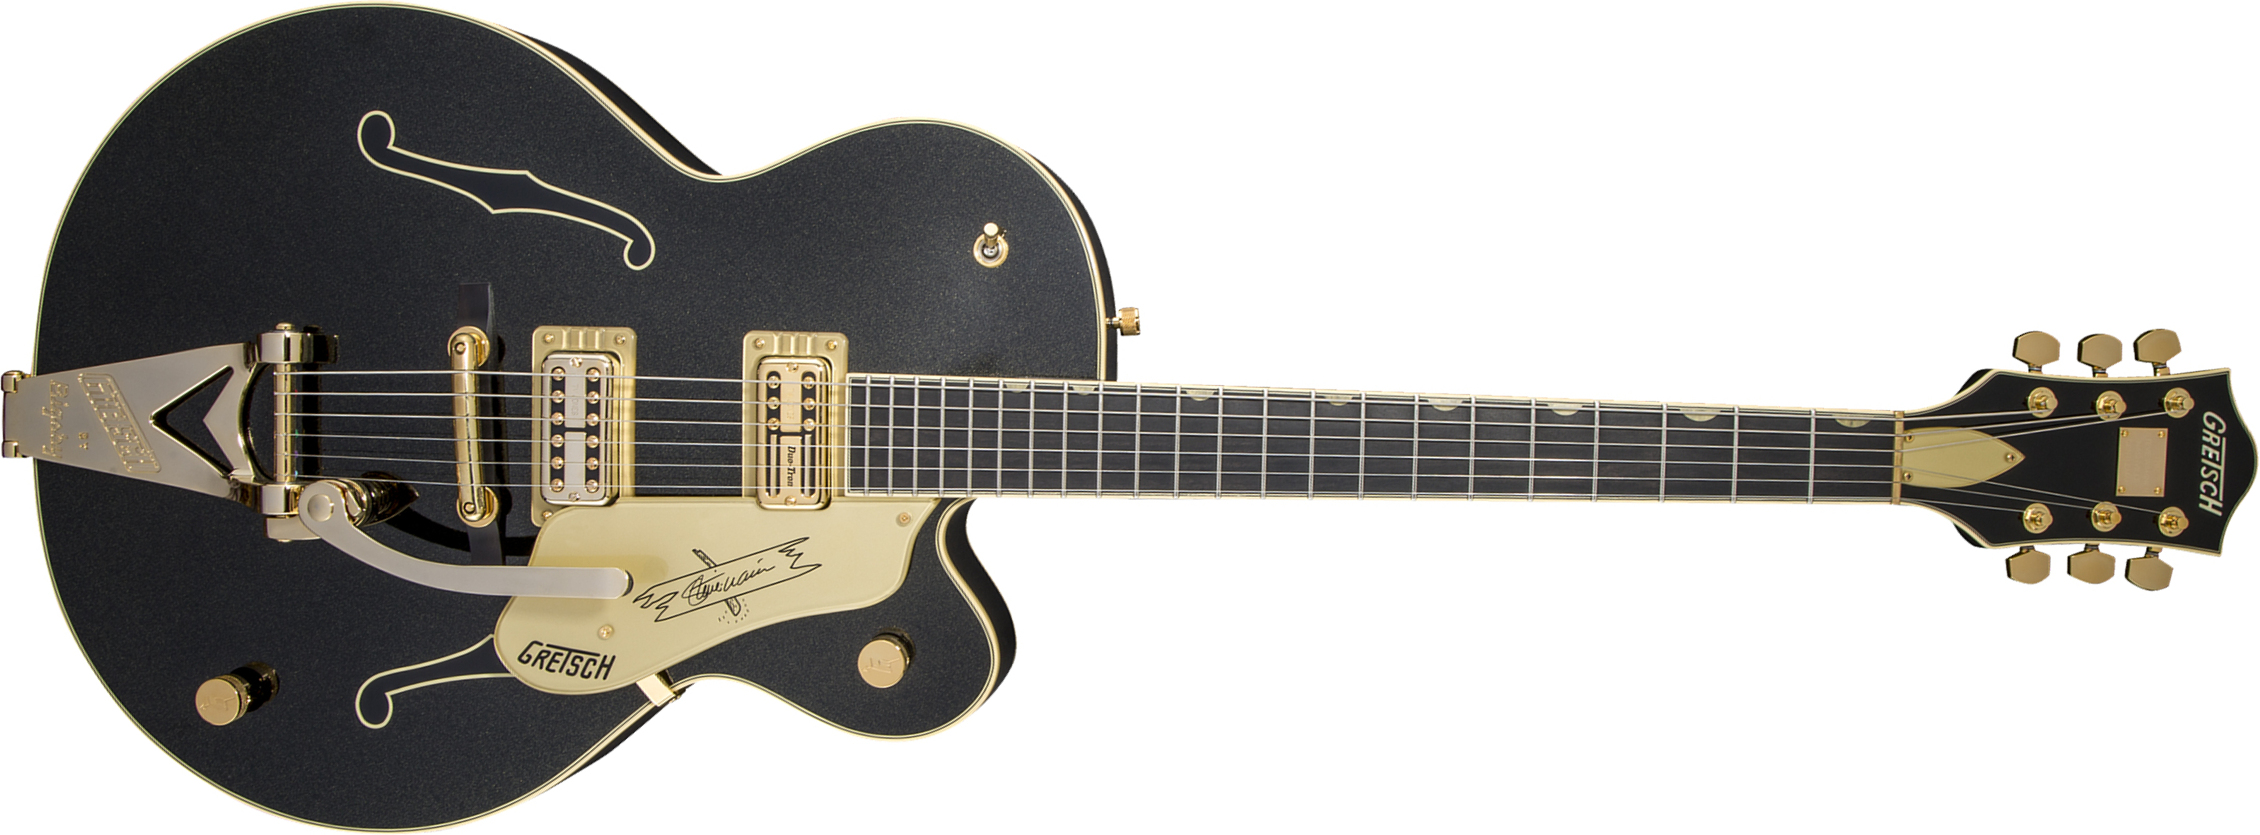 Gretsch Steve Wariner G6120t-sw Nashville Japon Signature Hh Bigsby Eb - Magic Black - Guitarra eléctrica semi caja - Main picture